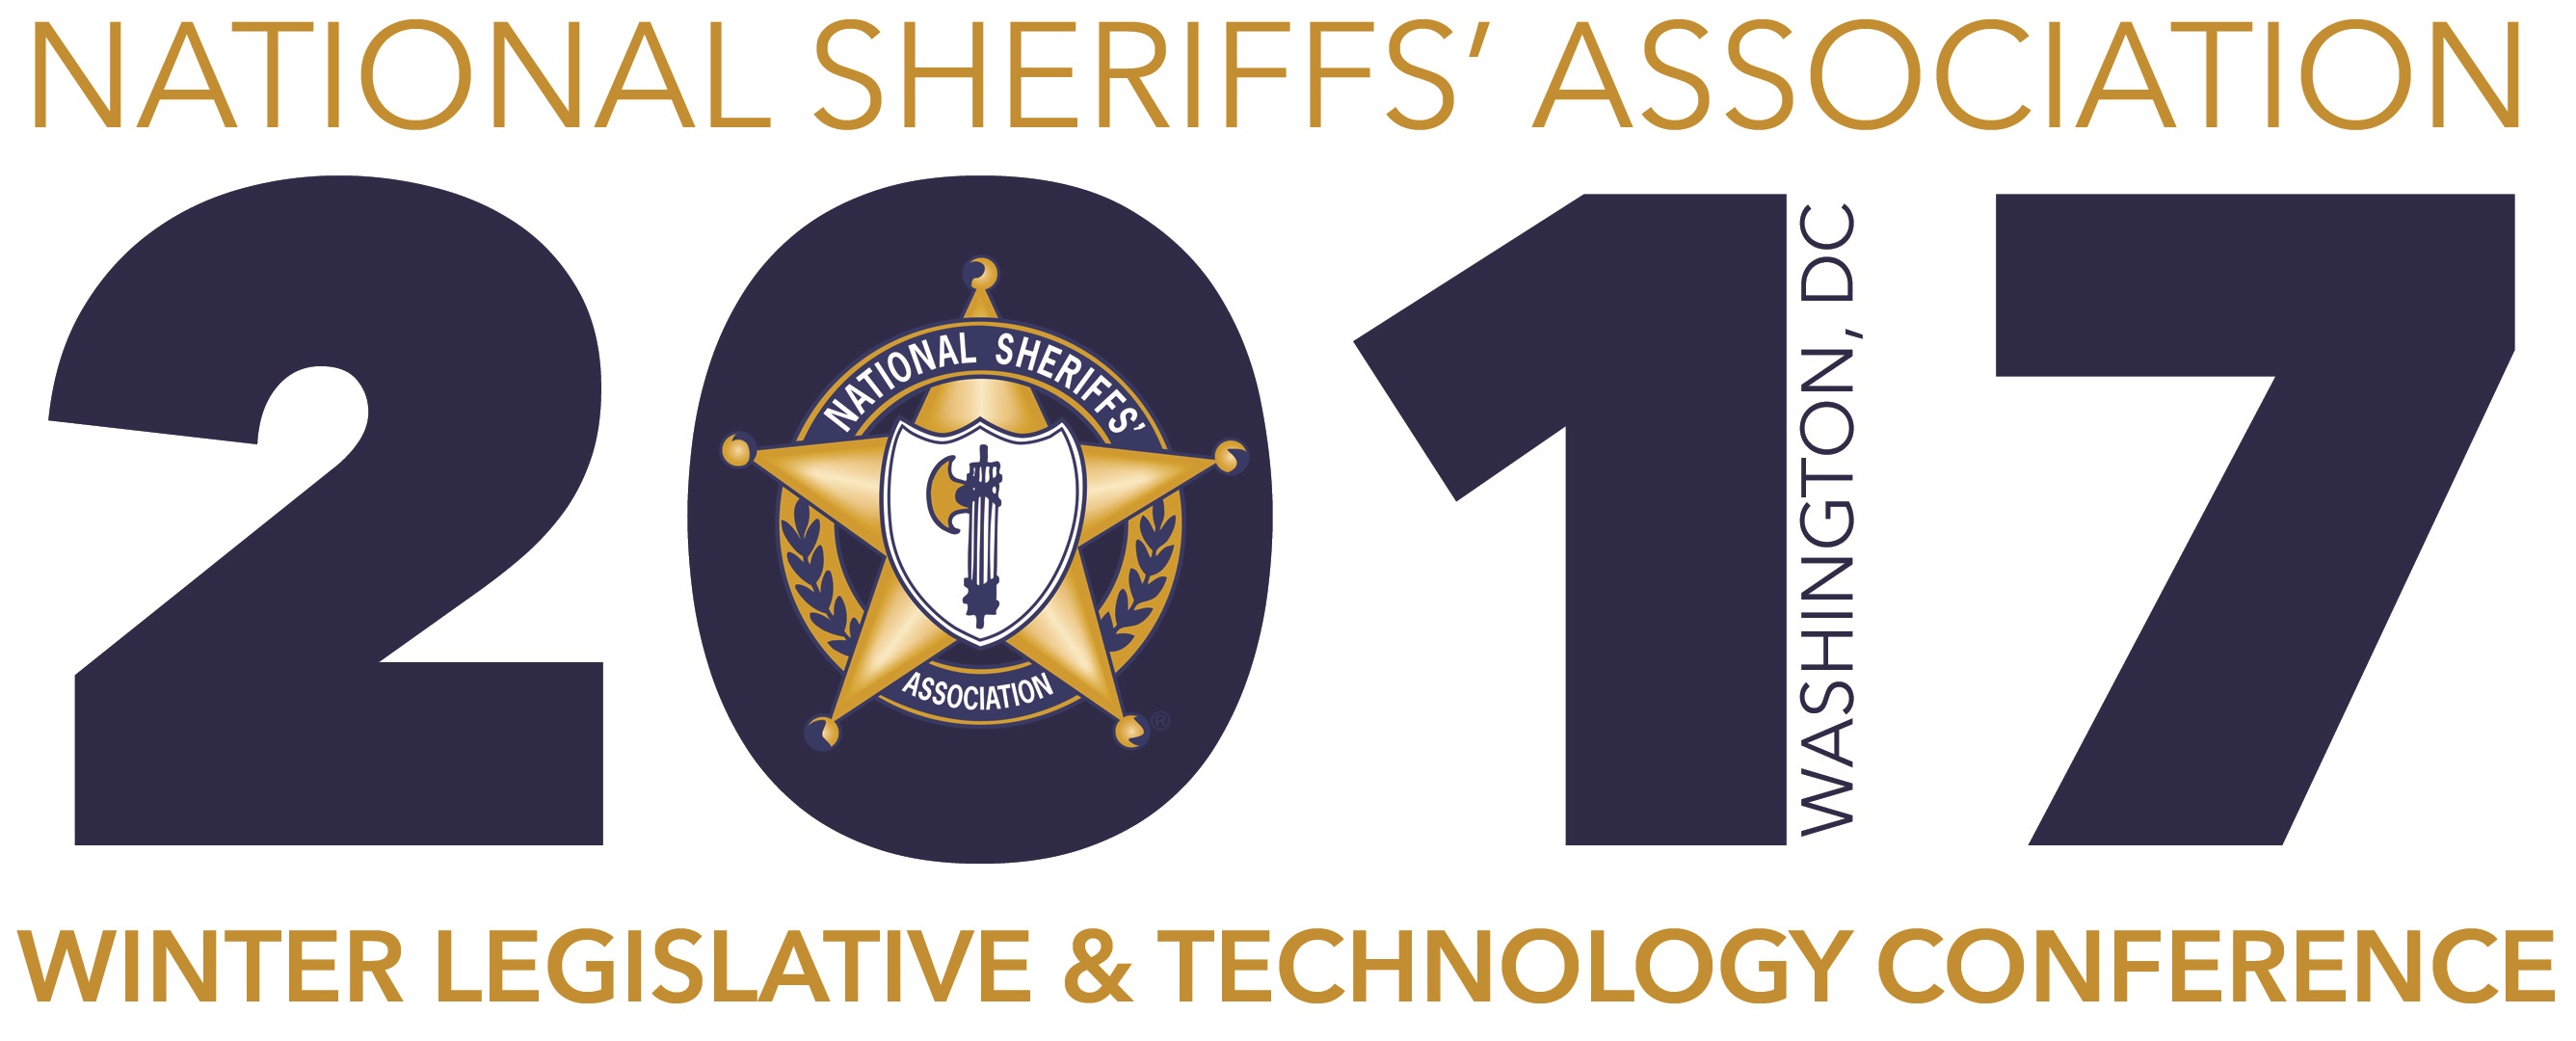 Reception RSVP NATIONAL SHERIFFS’ ASSOCIATION